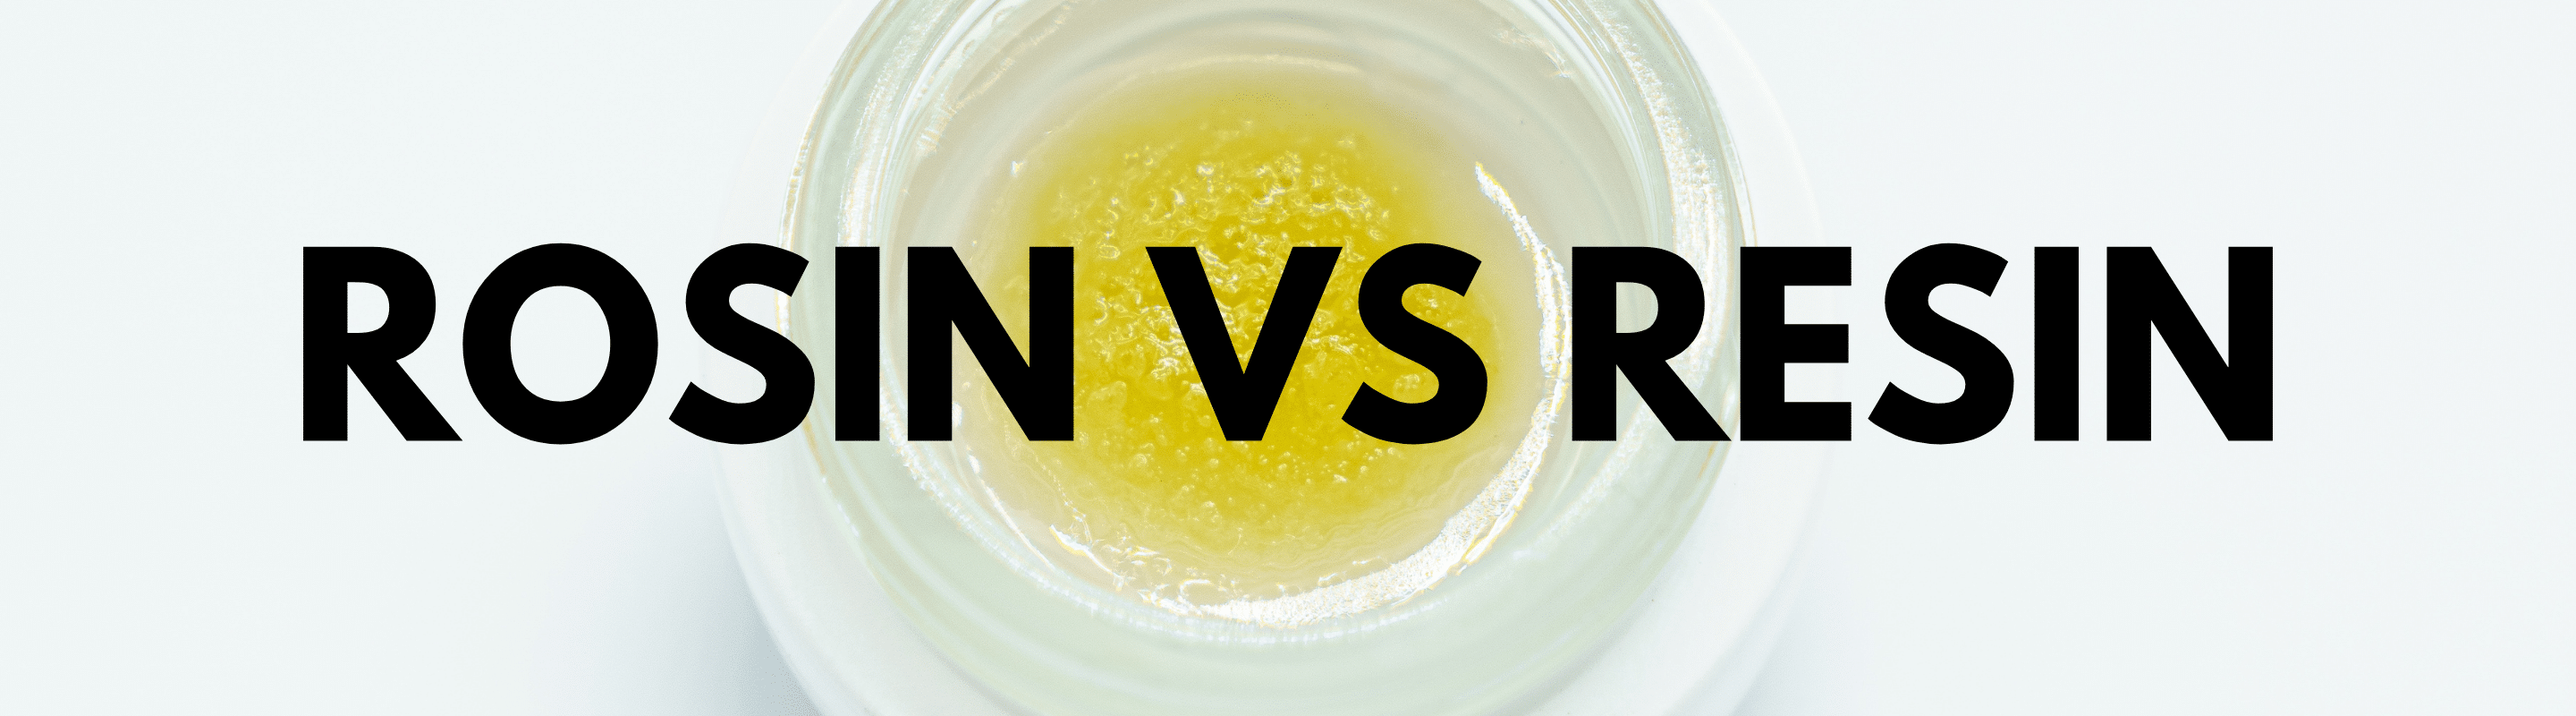 rosin vs resin cannabis extracts